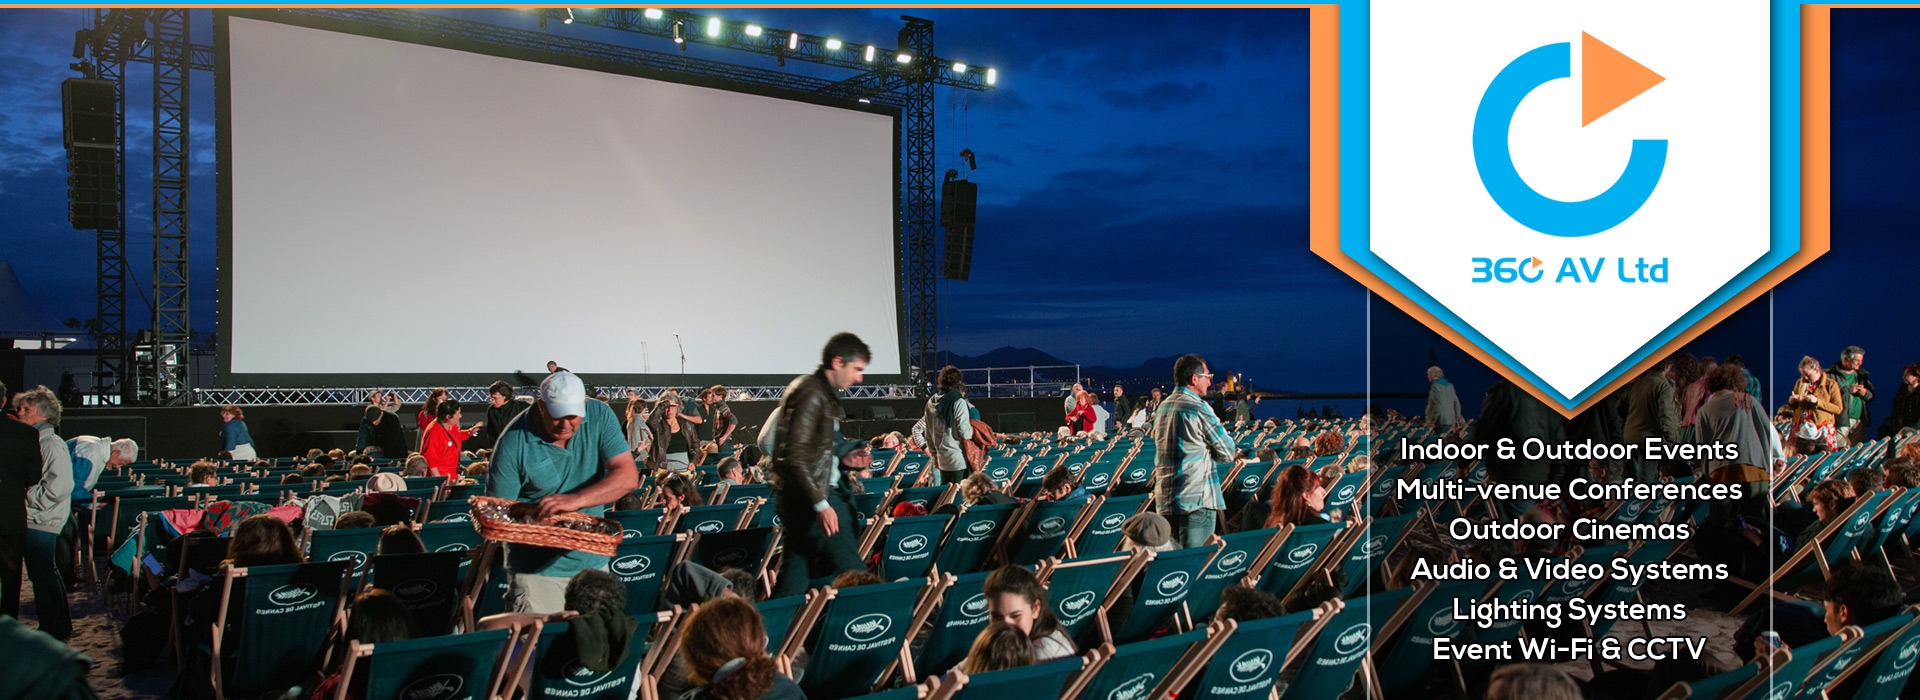 360 AV Ltd | Outdoor Cinema and Events